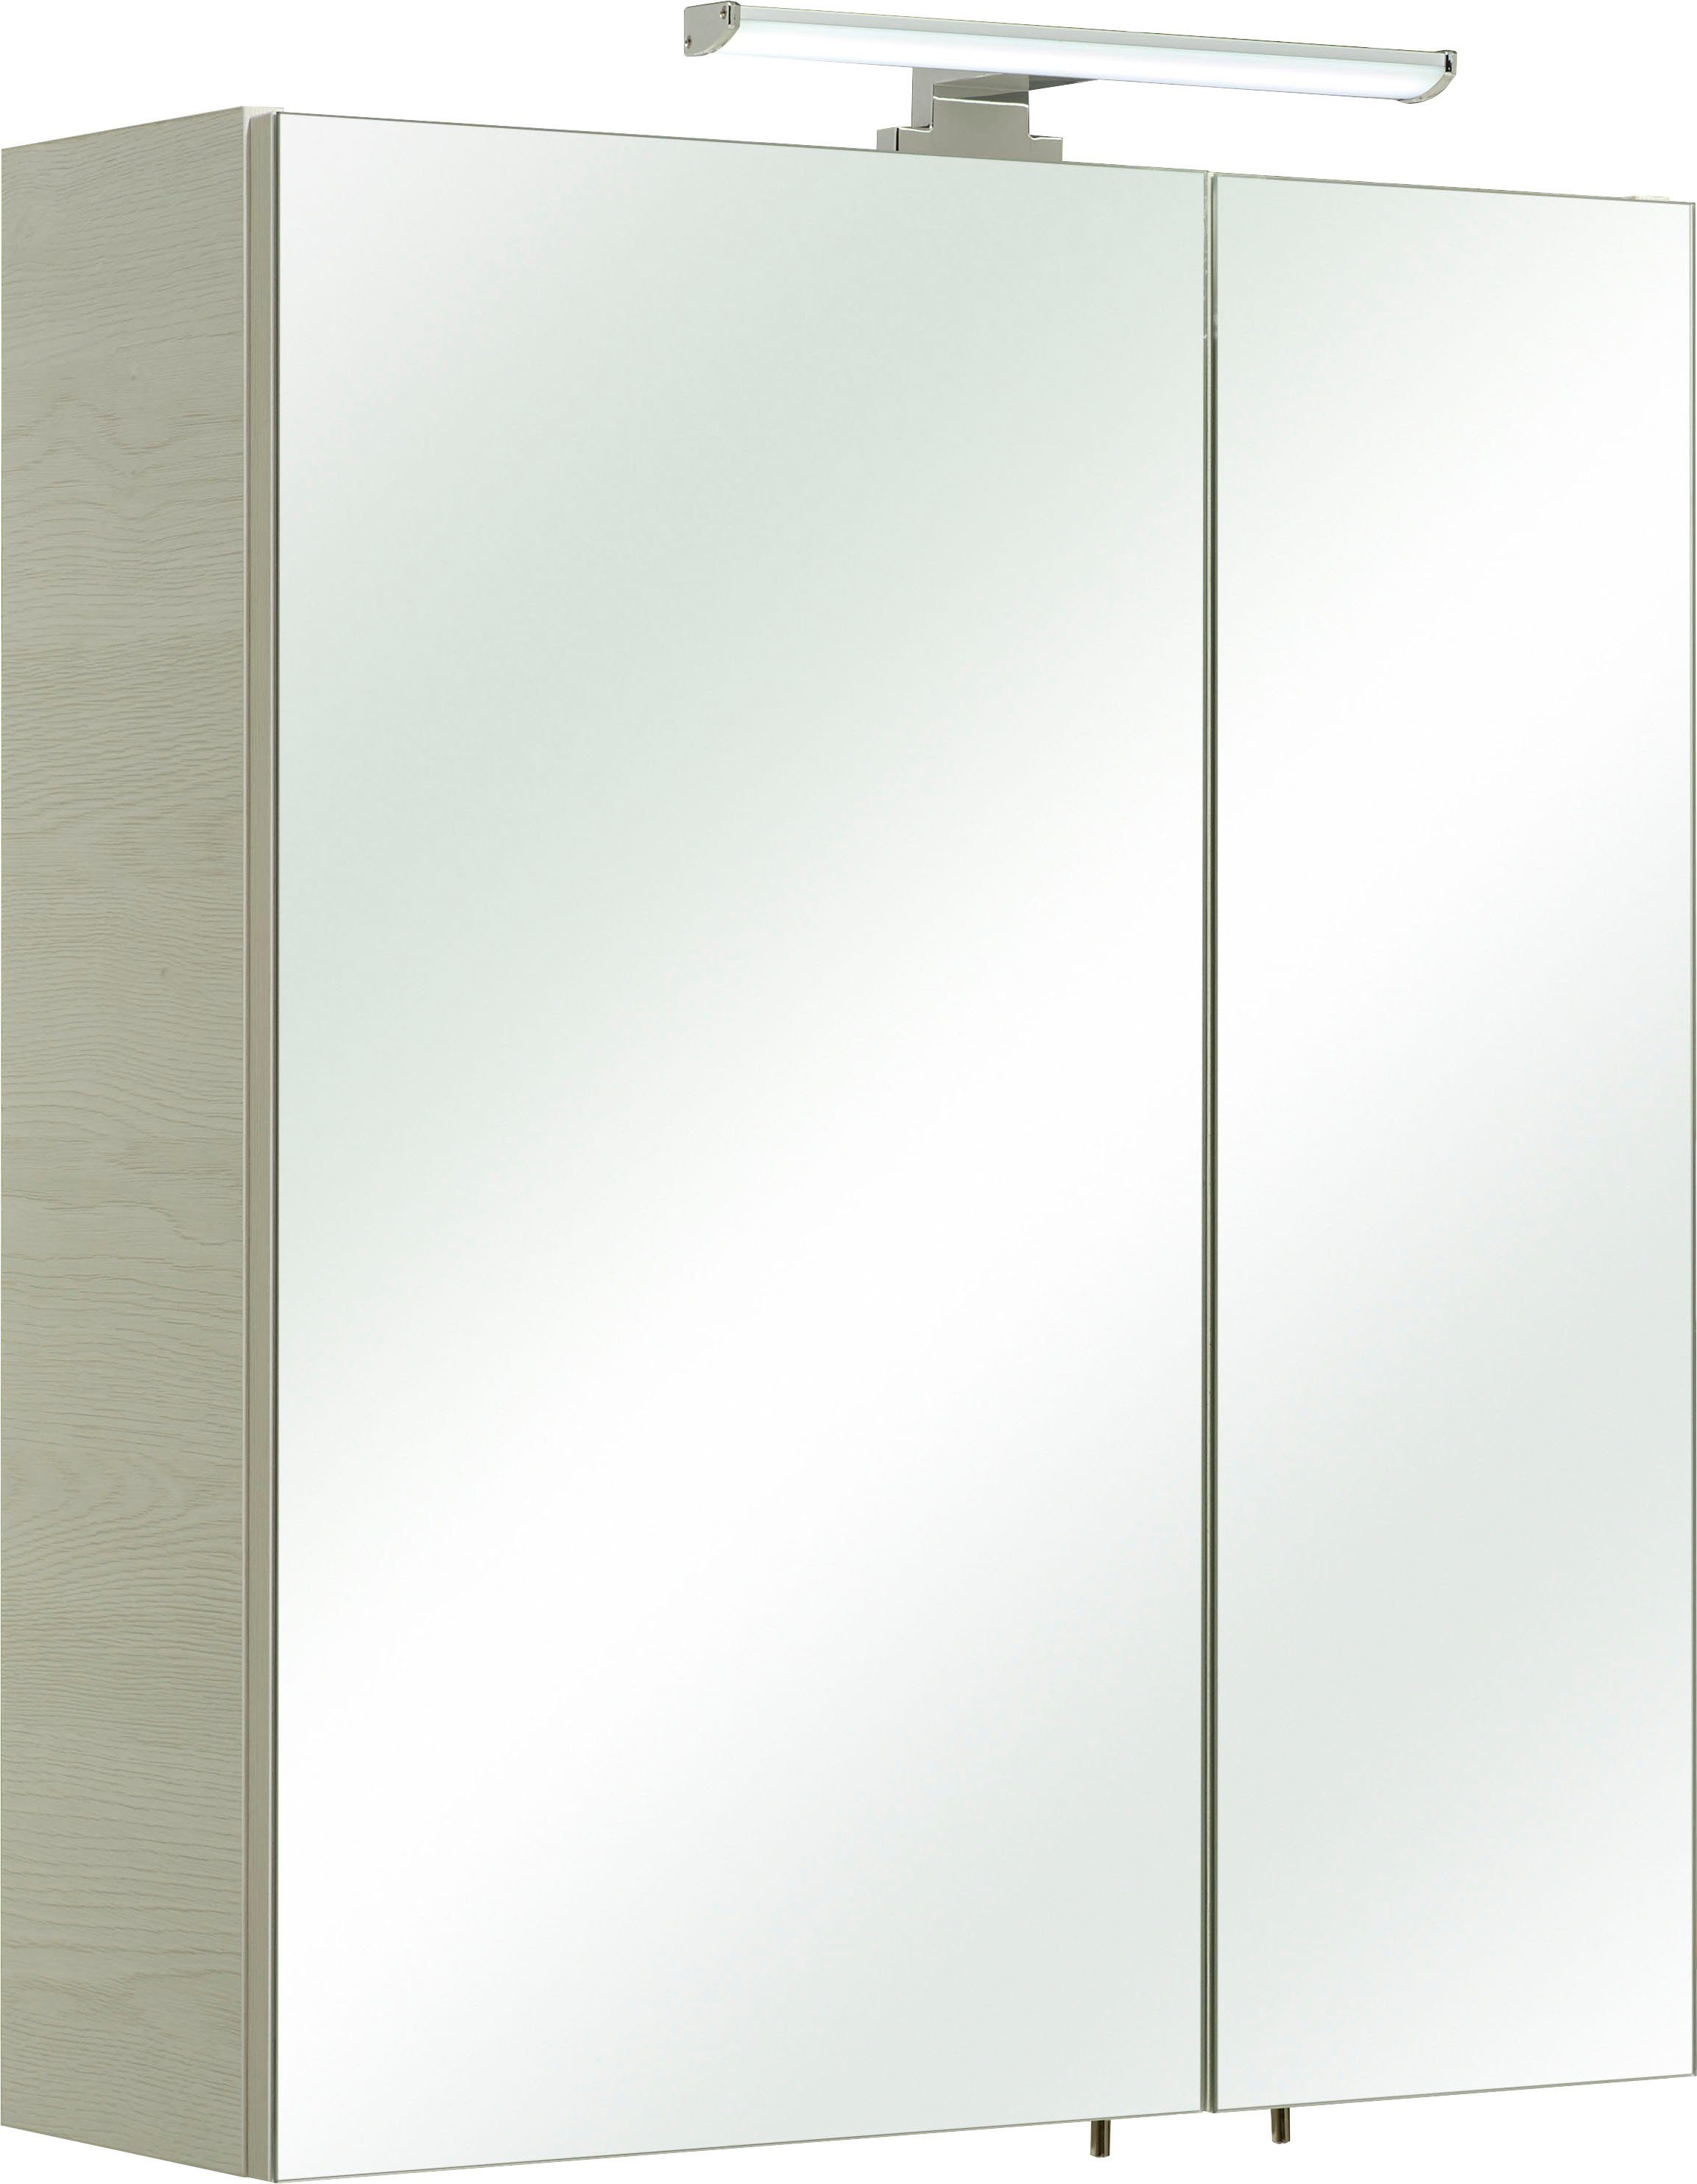 PELIPAL Spiegelschrank Quickset 936 Breite 60 cm, 2-türig, LED-Beleuchtung, Schalter-/Steckdosenbox